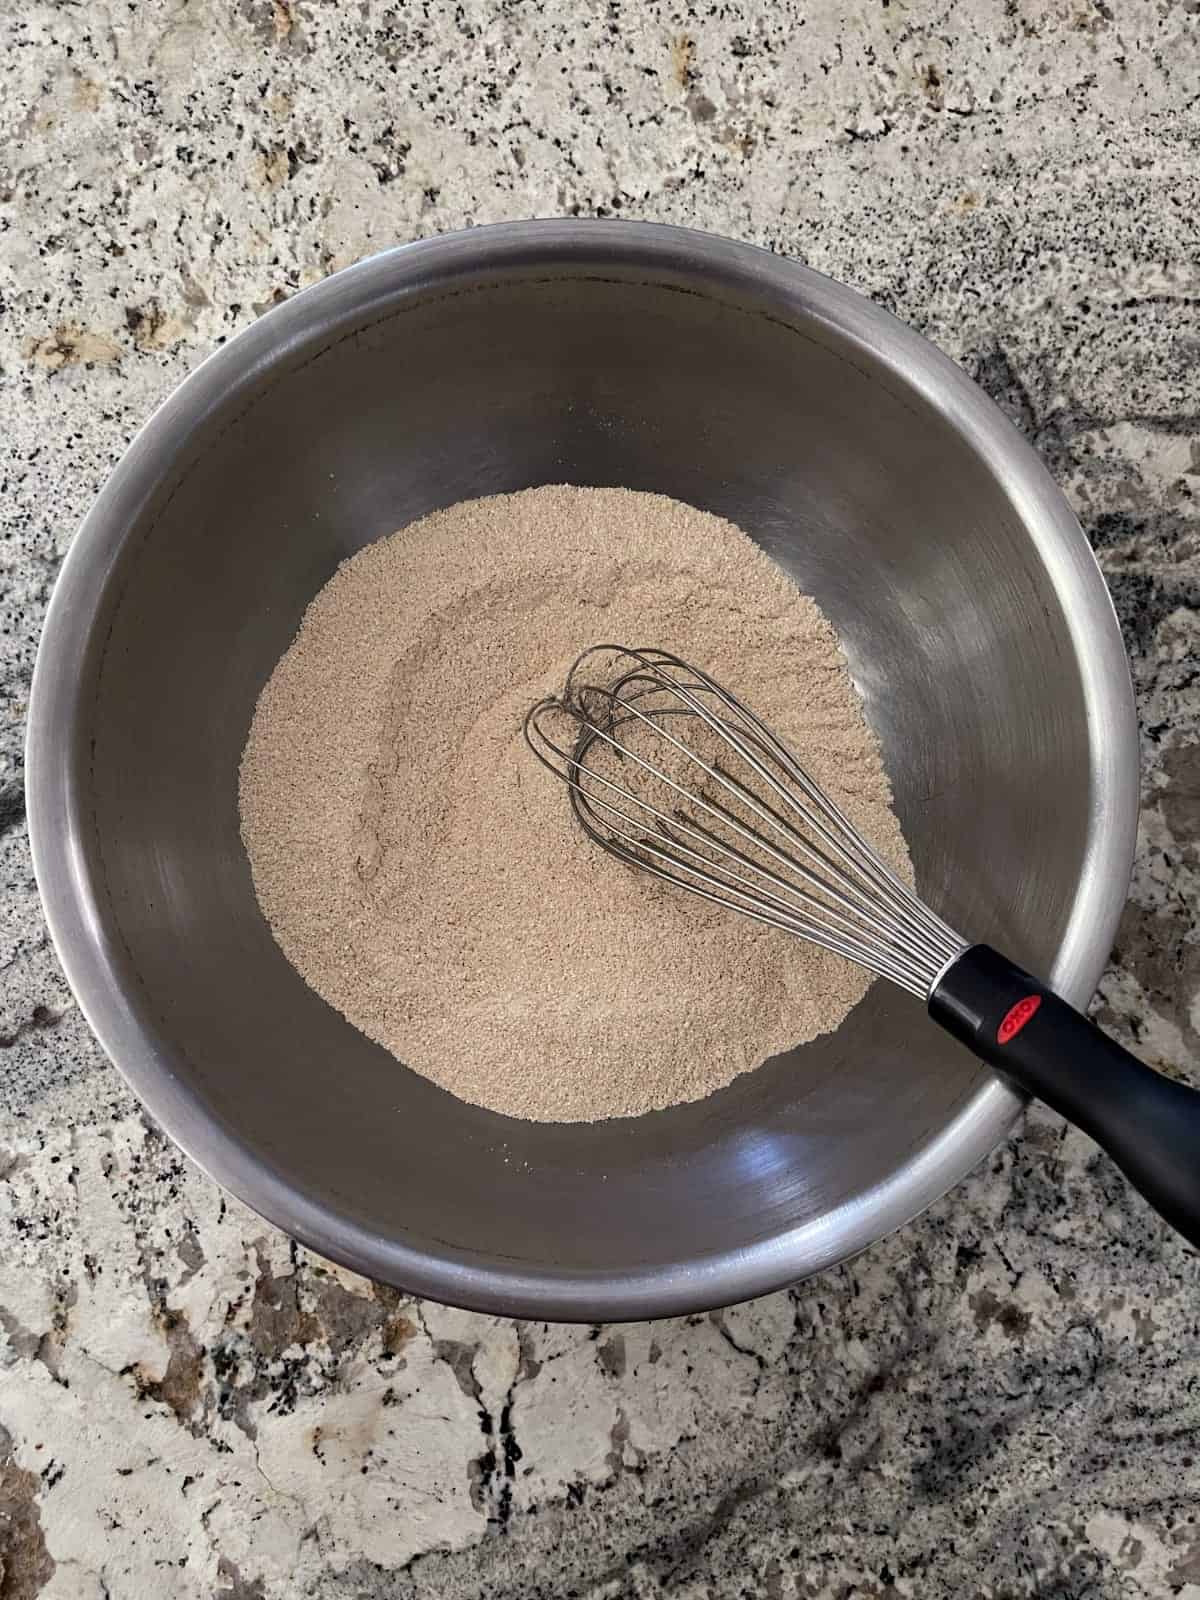 Whisking quinoa flour, baking powder, cinnamon, ginger, baking soda, salt and nutmeg in mixing bowl.